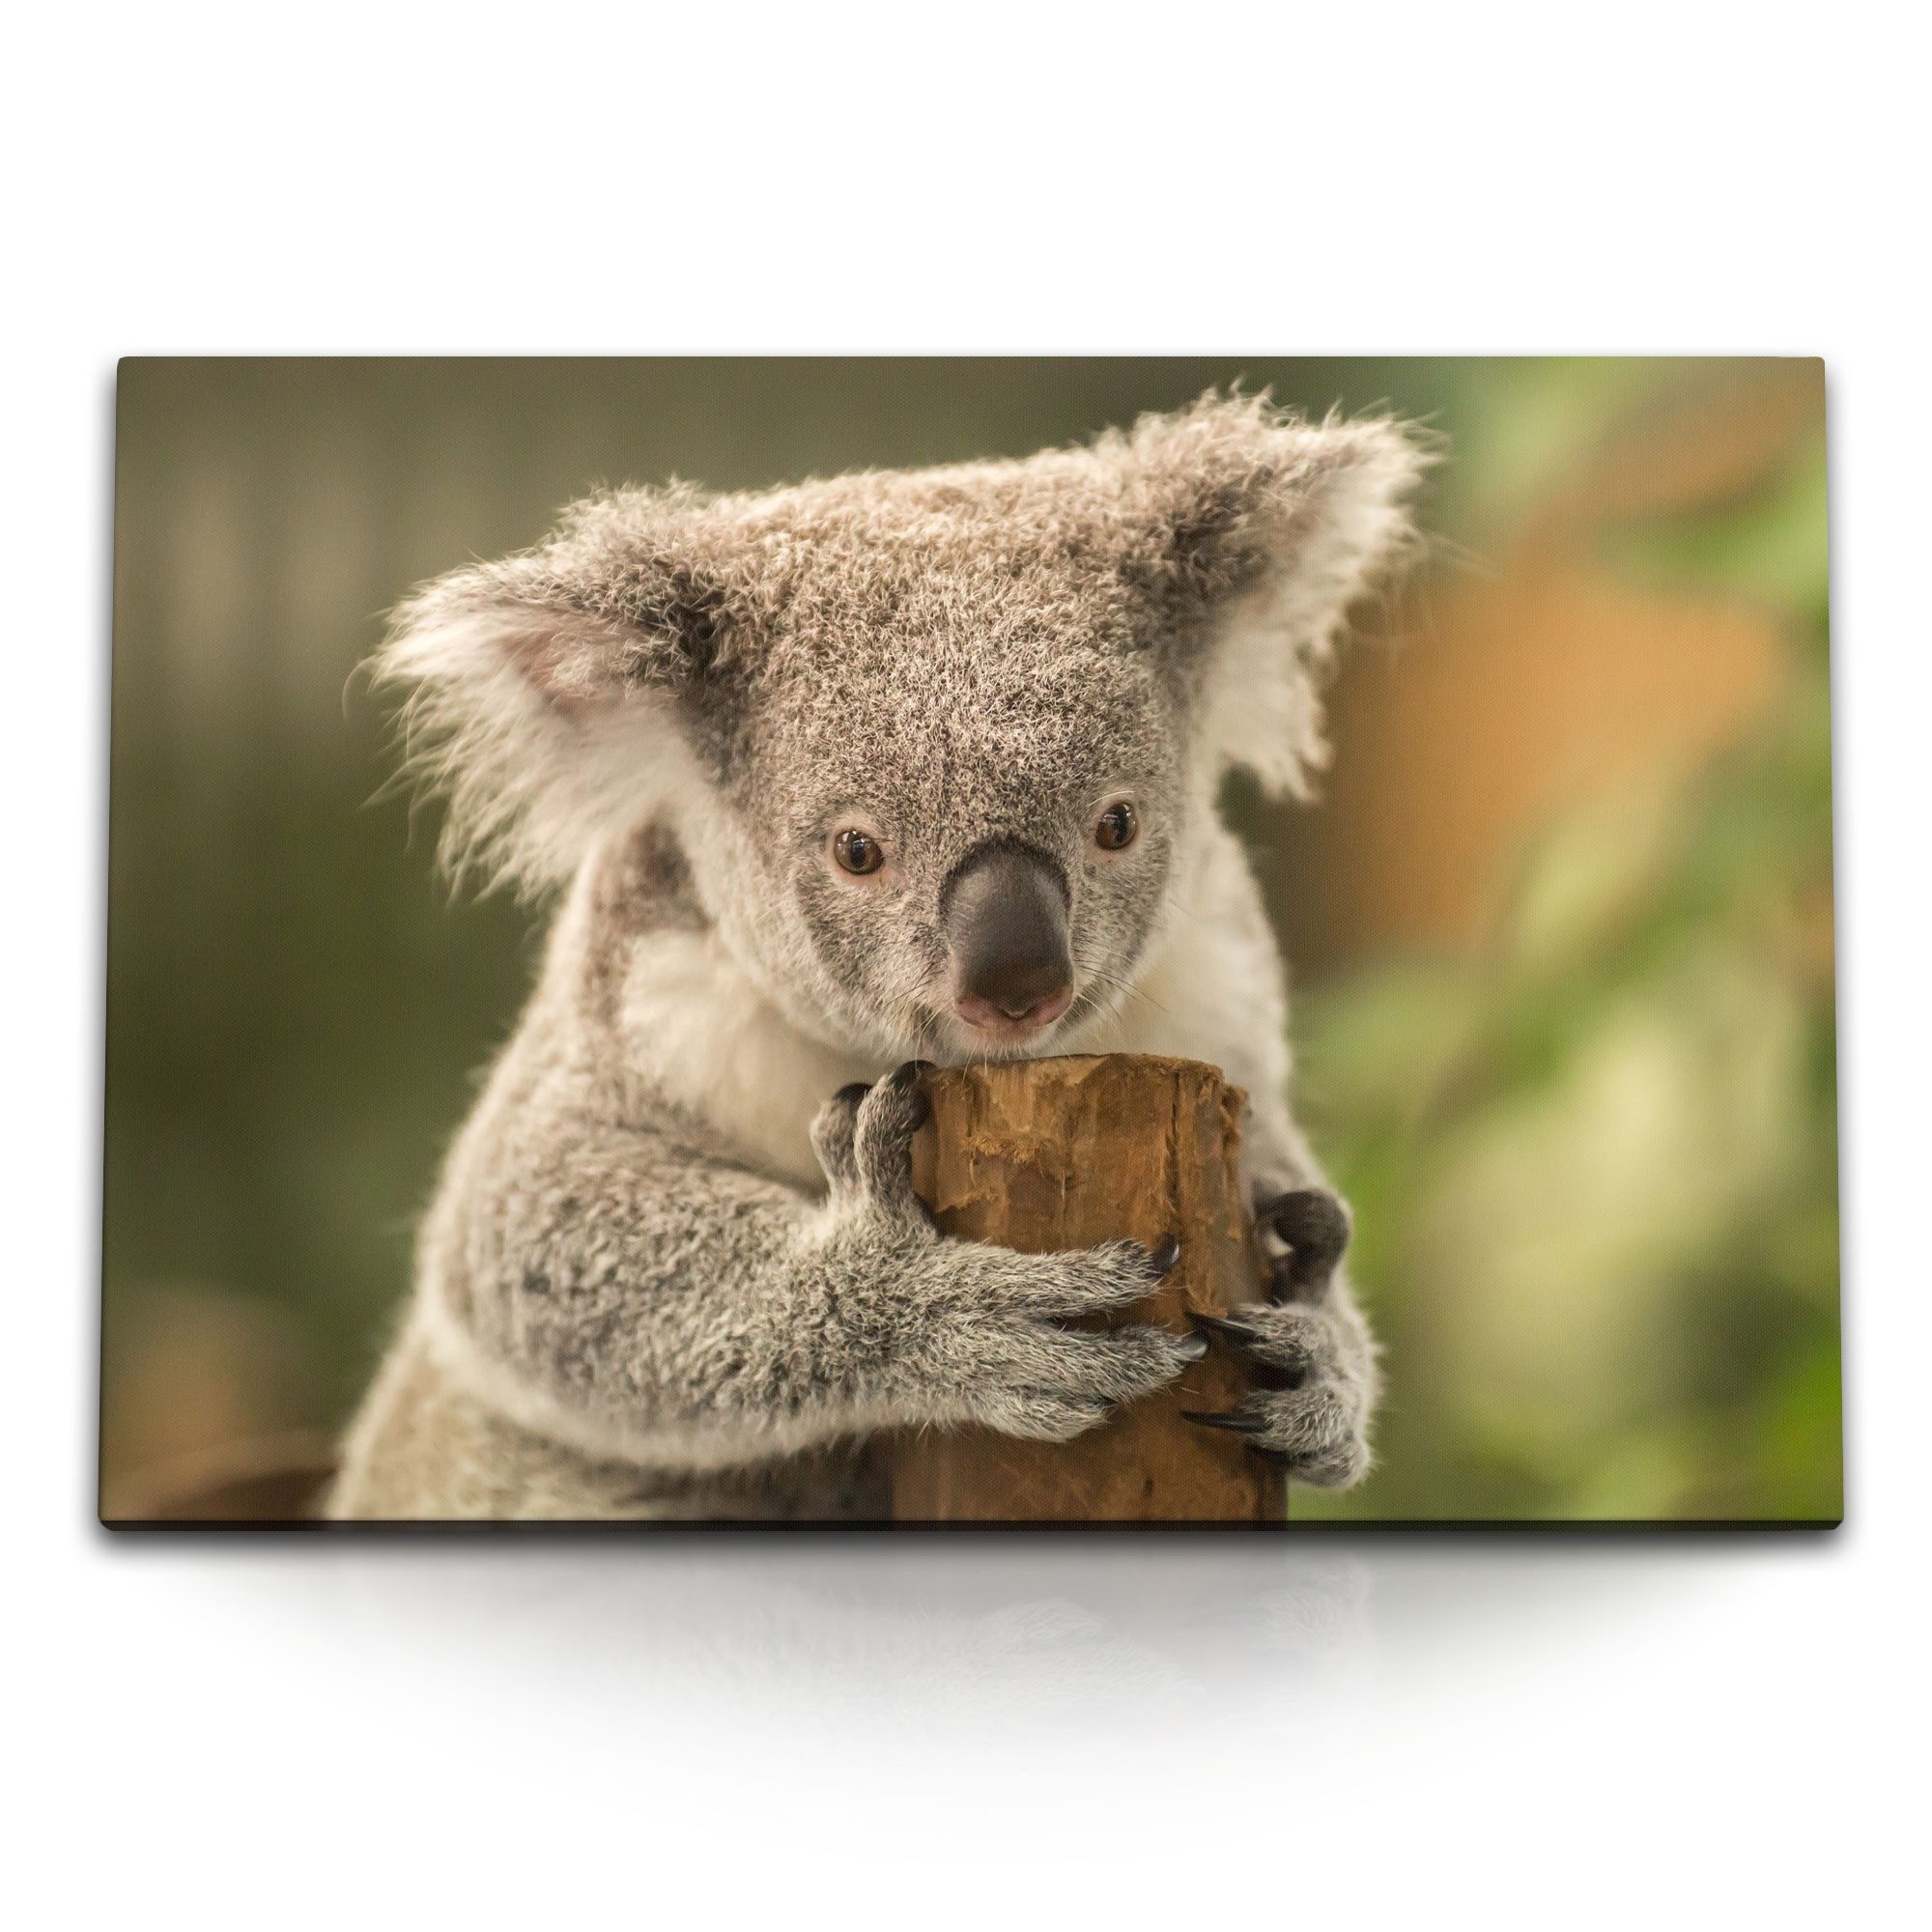 Sinus Art Leinwandbild 120x80cm Wandbild auf Leinwand Australien Koala Koalabär Natur Baumsta, (1 St)